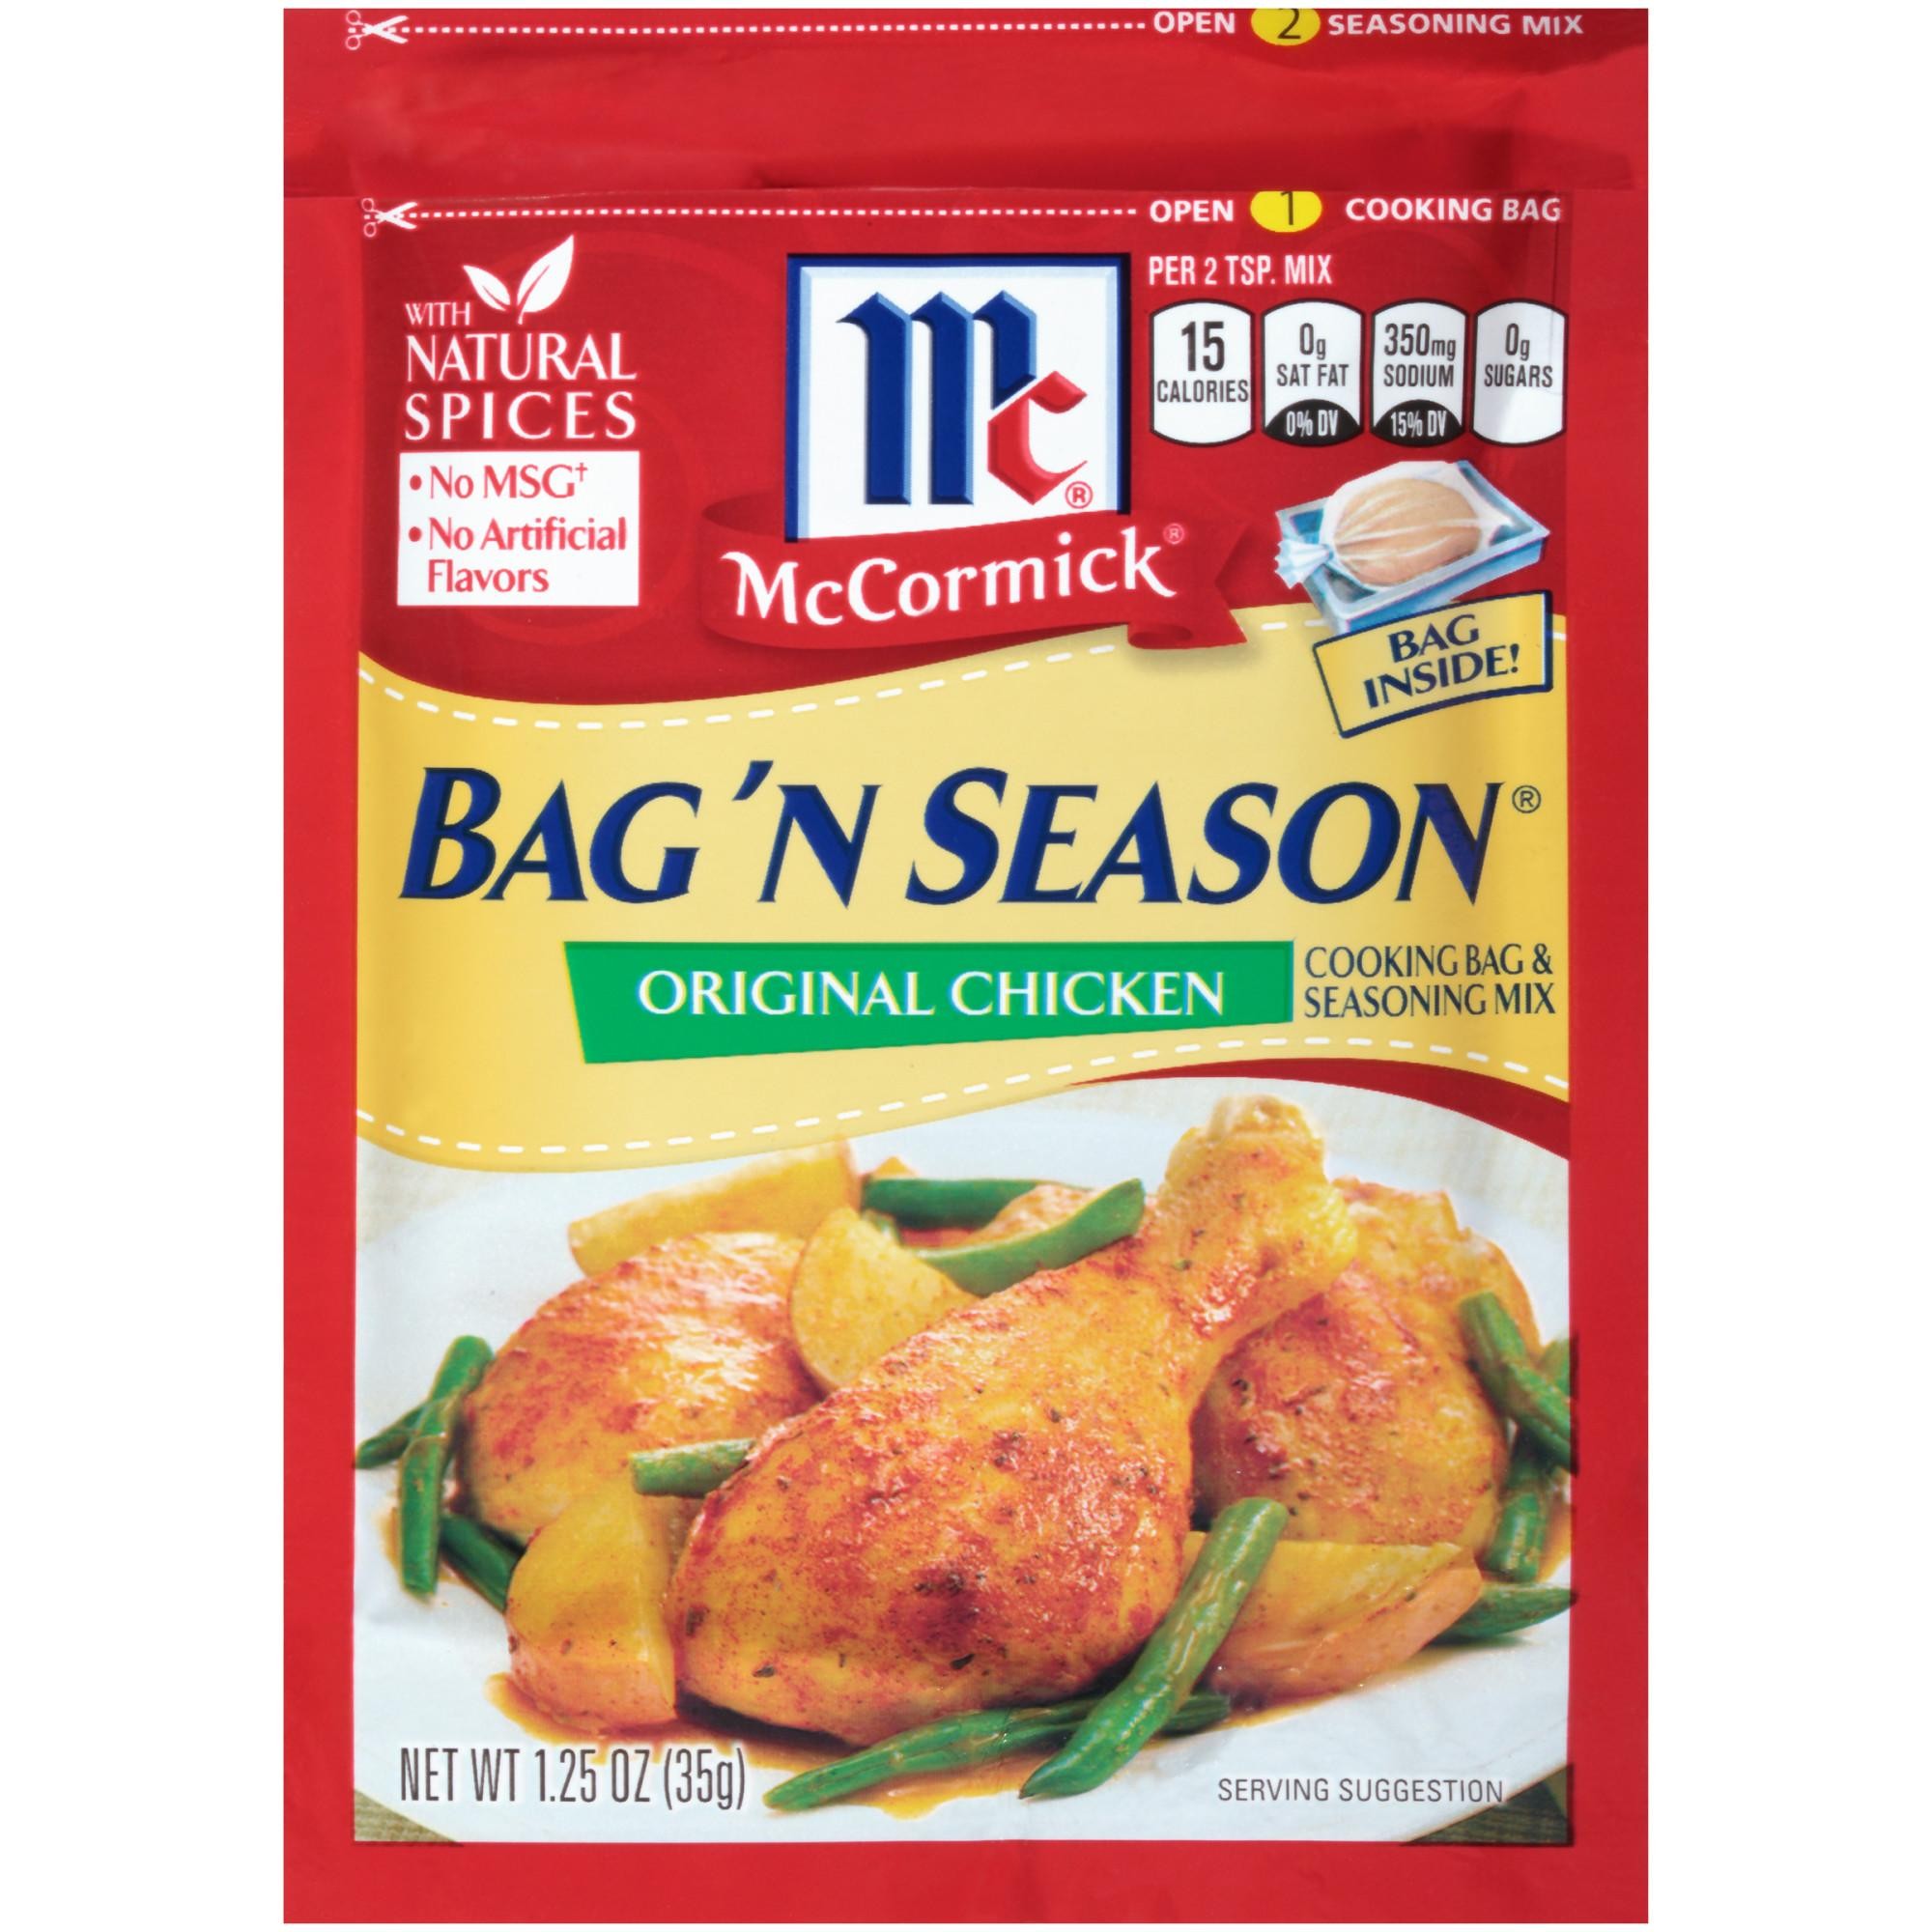 McCormick Bag ‘N Seal Cooking Bag & Seasoning Mix Original Chicken - 1.25 Oz